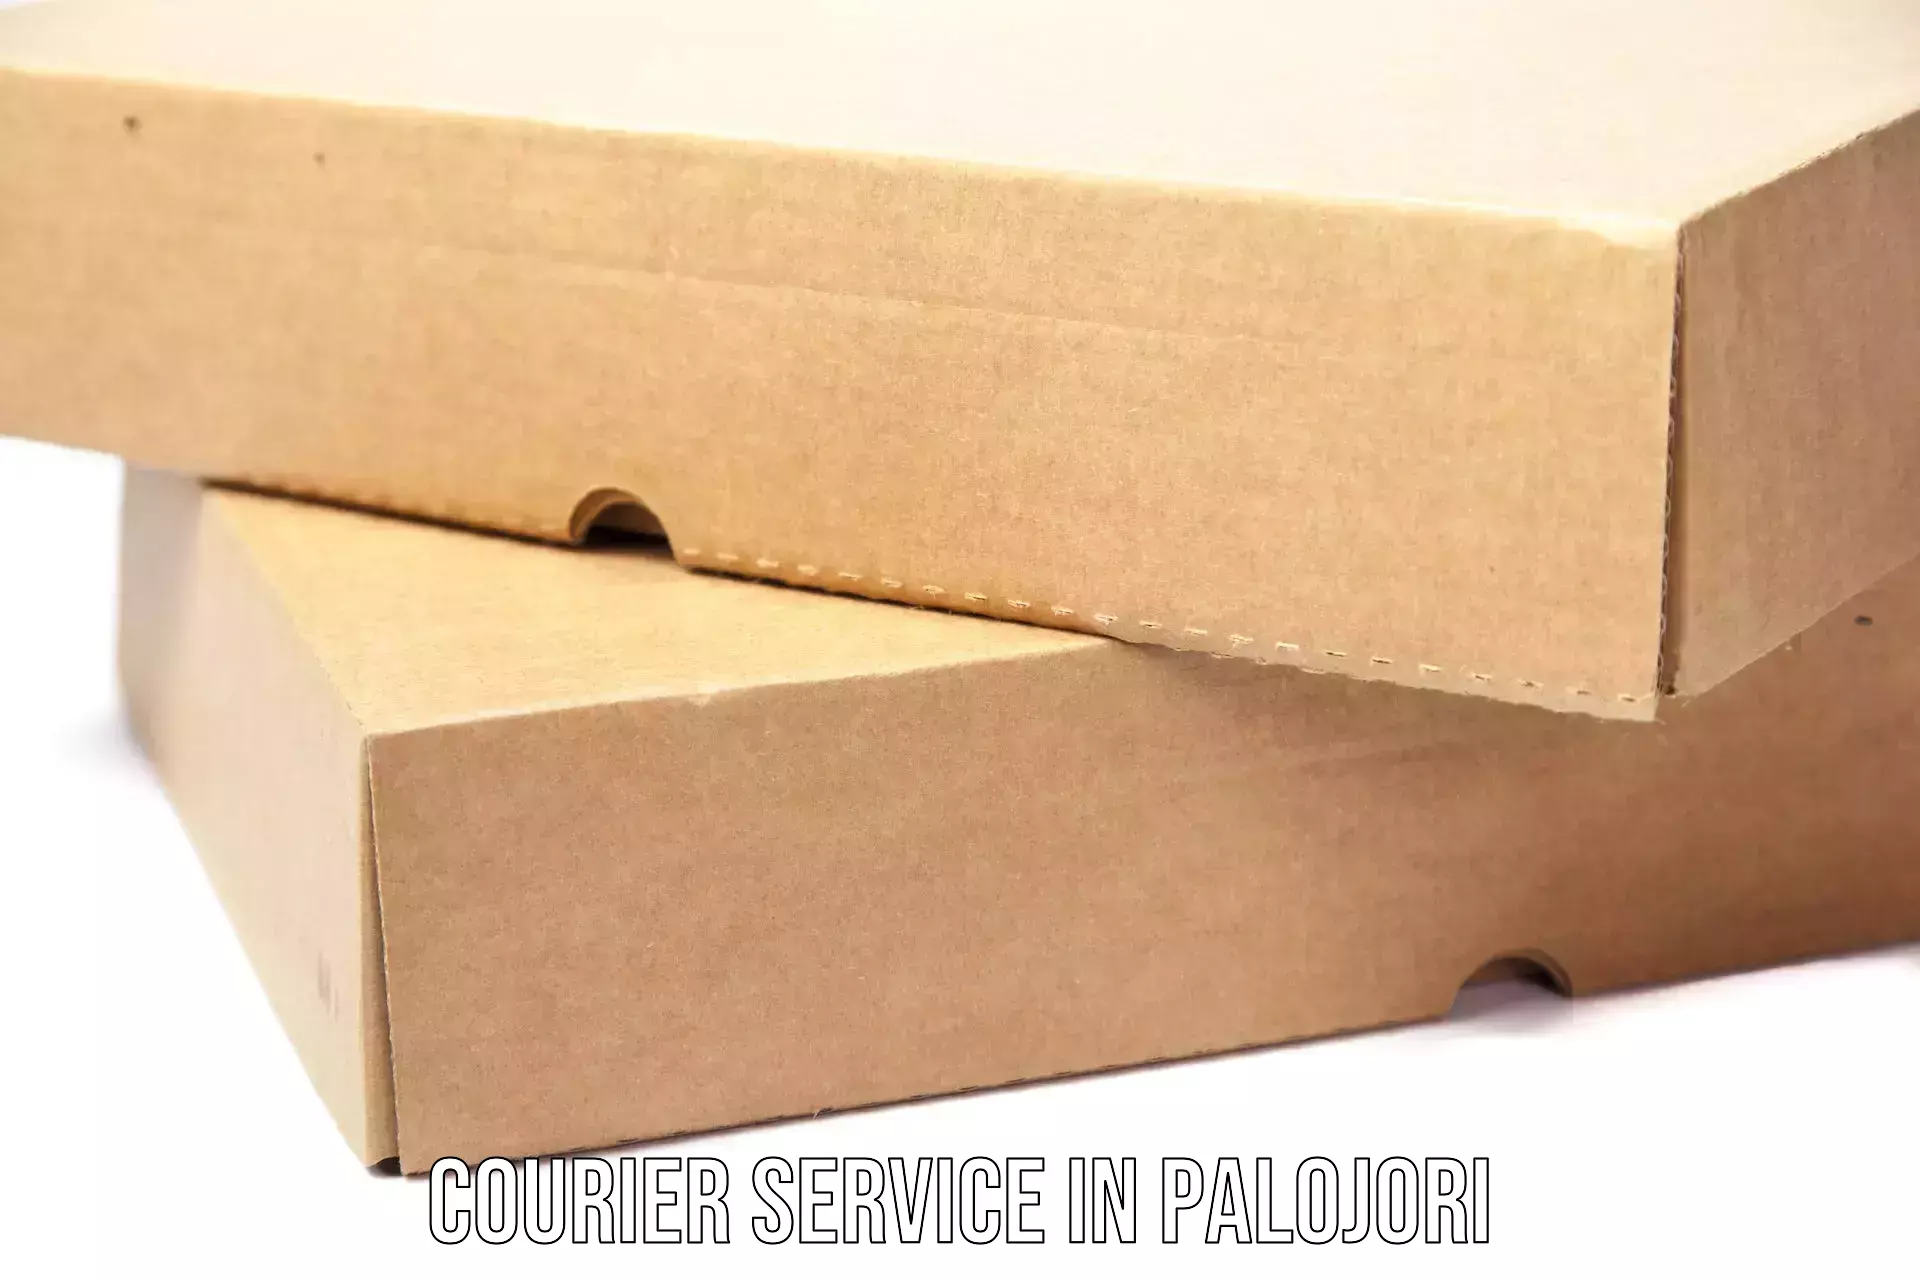 Individual parcel service in Palojori